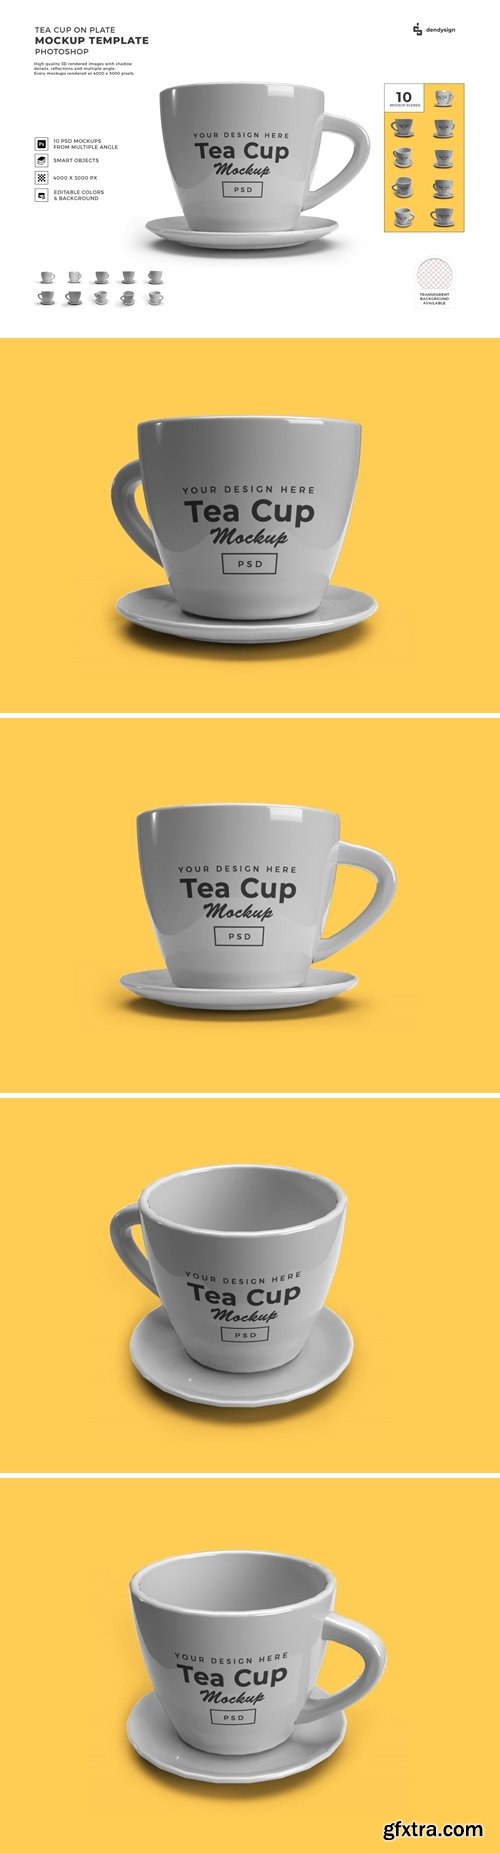 Tea Cup Mockup Template Set